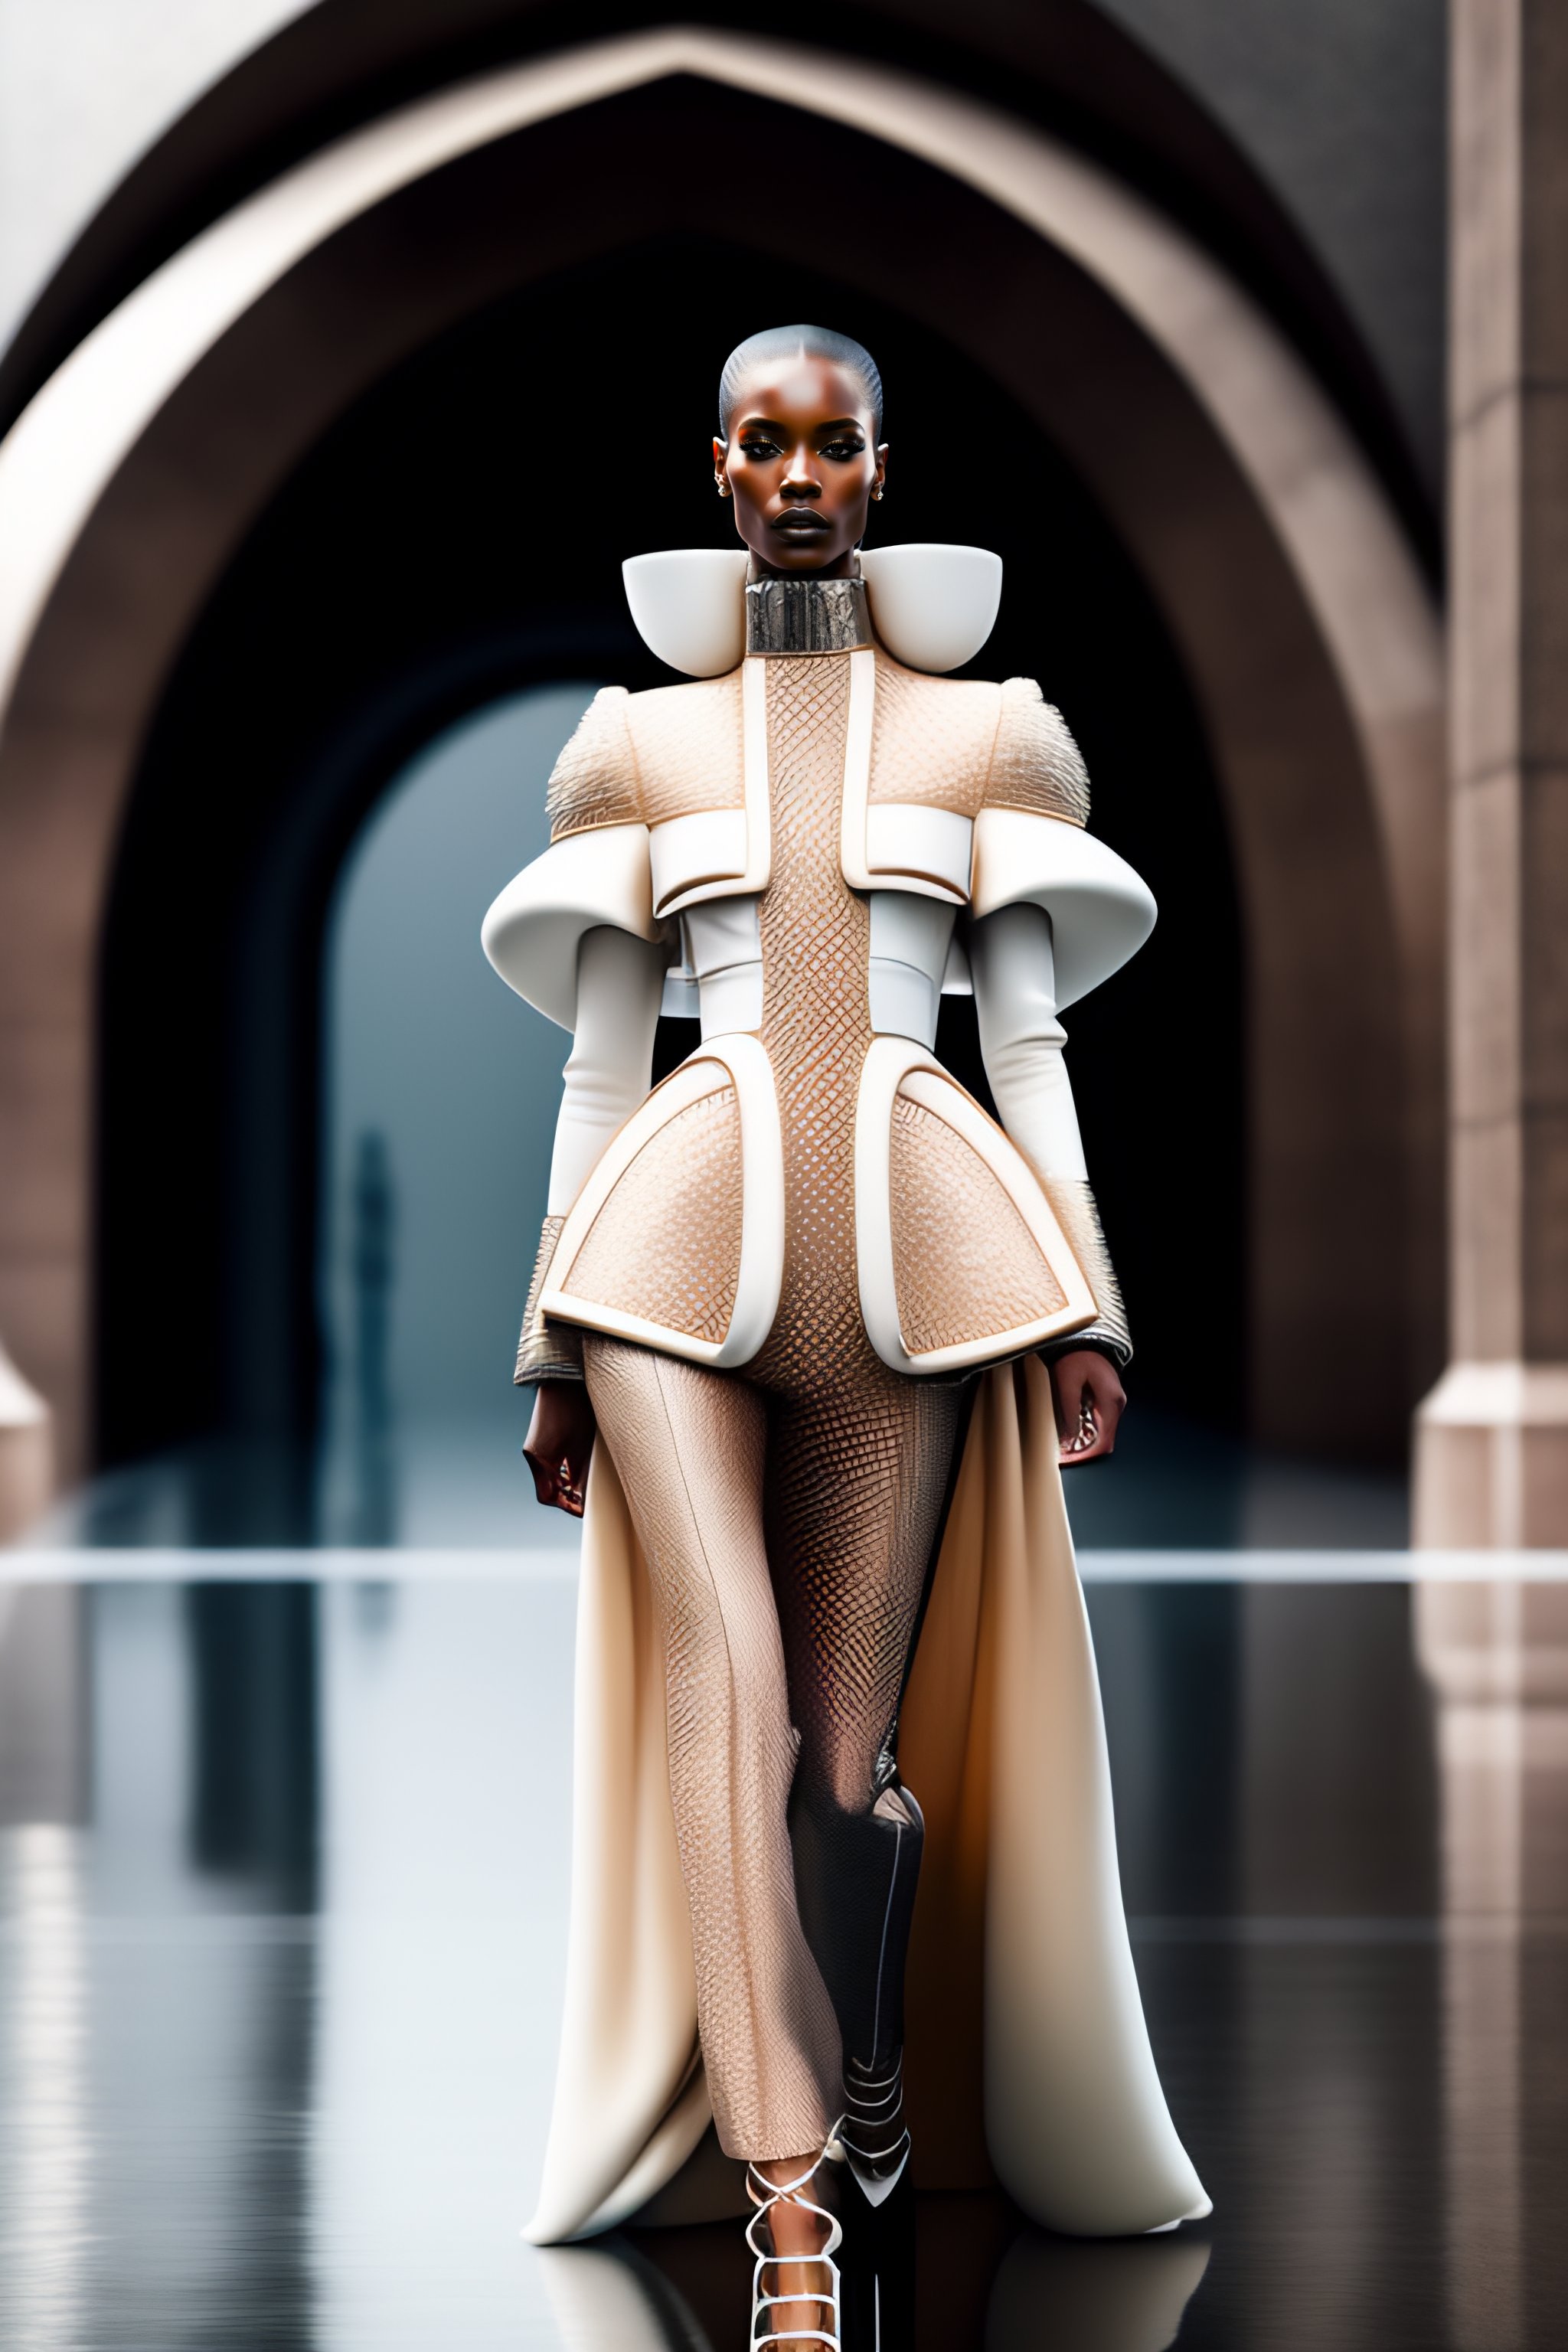 Lexica - futuristic fashion avant-garde couture